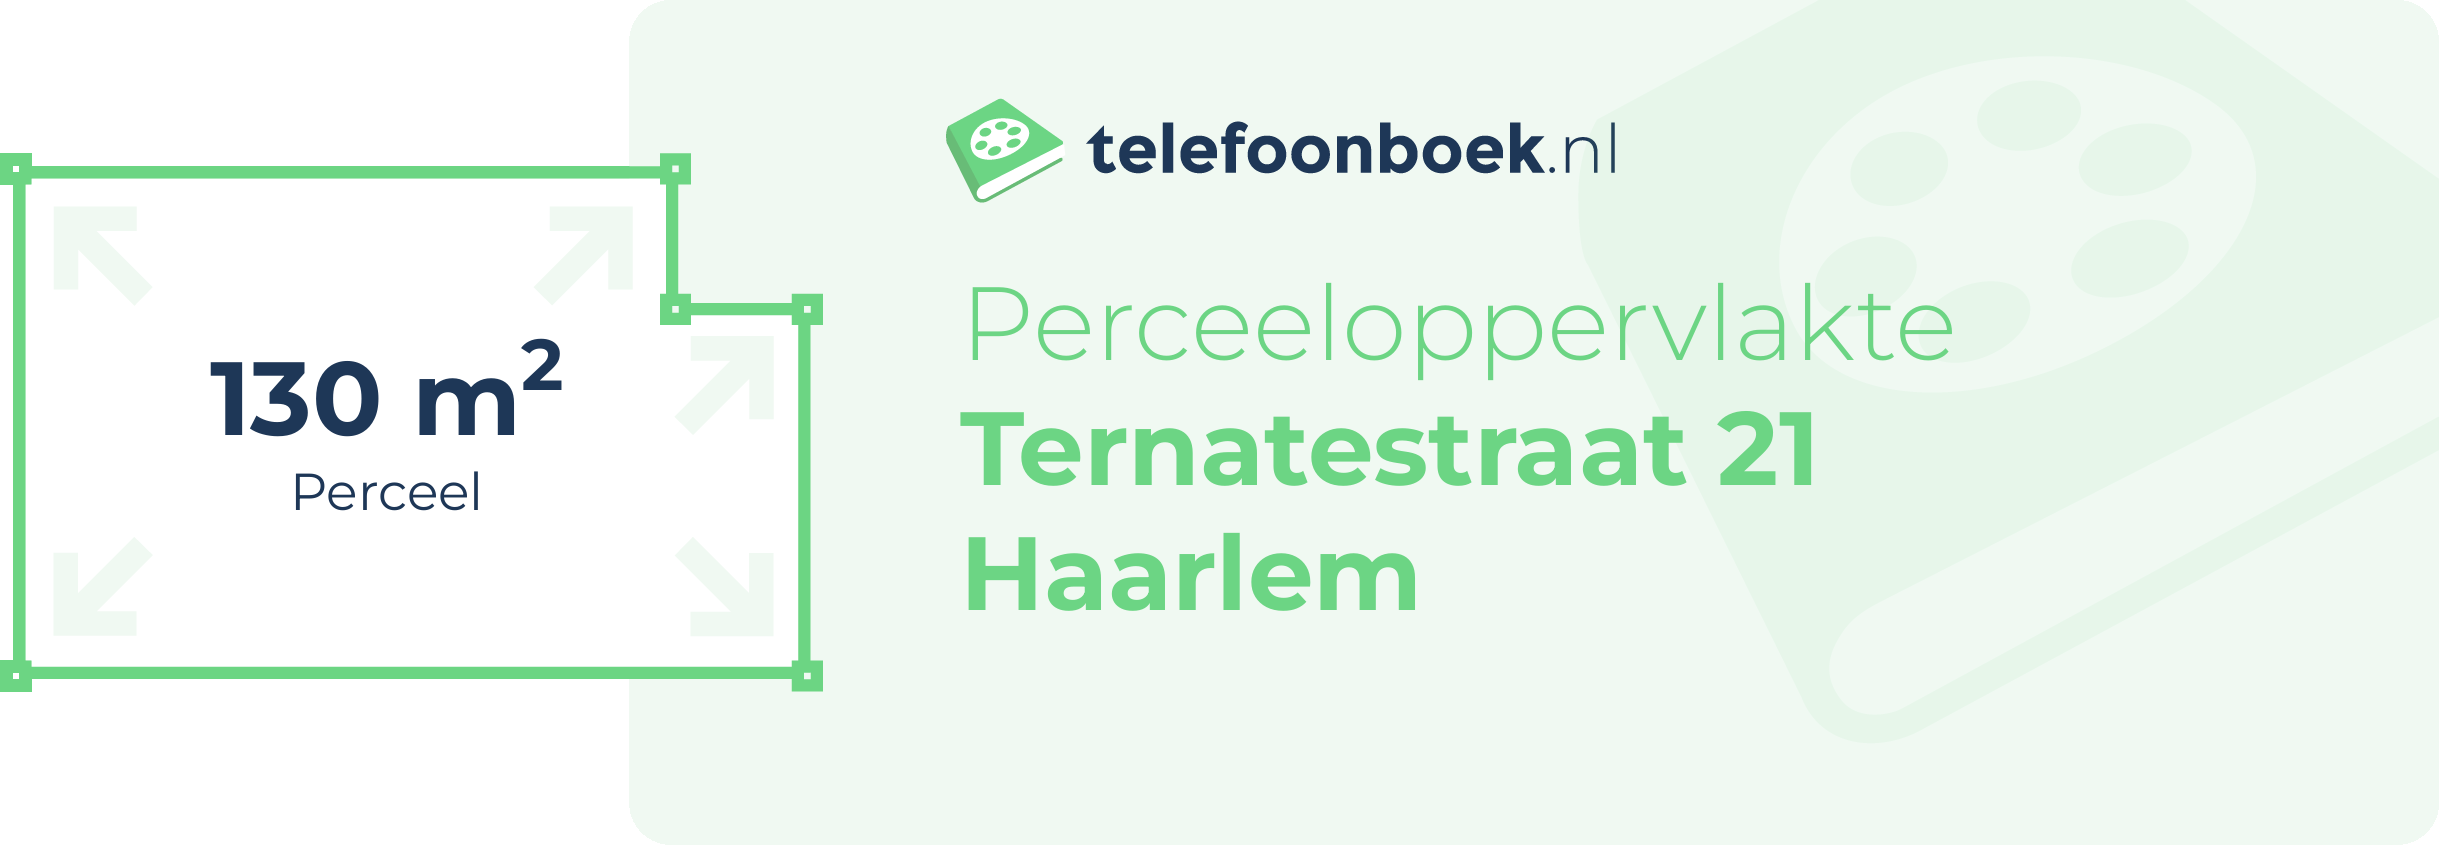 Perceeloppervlakte Ternatestraat 21 Haarlem